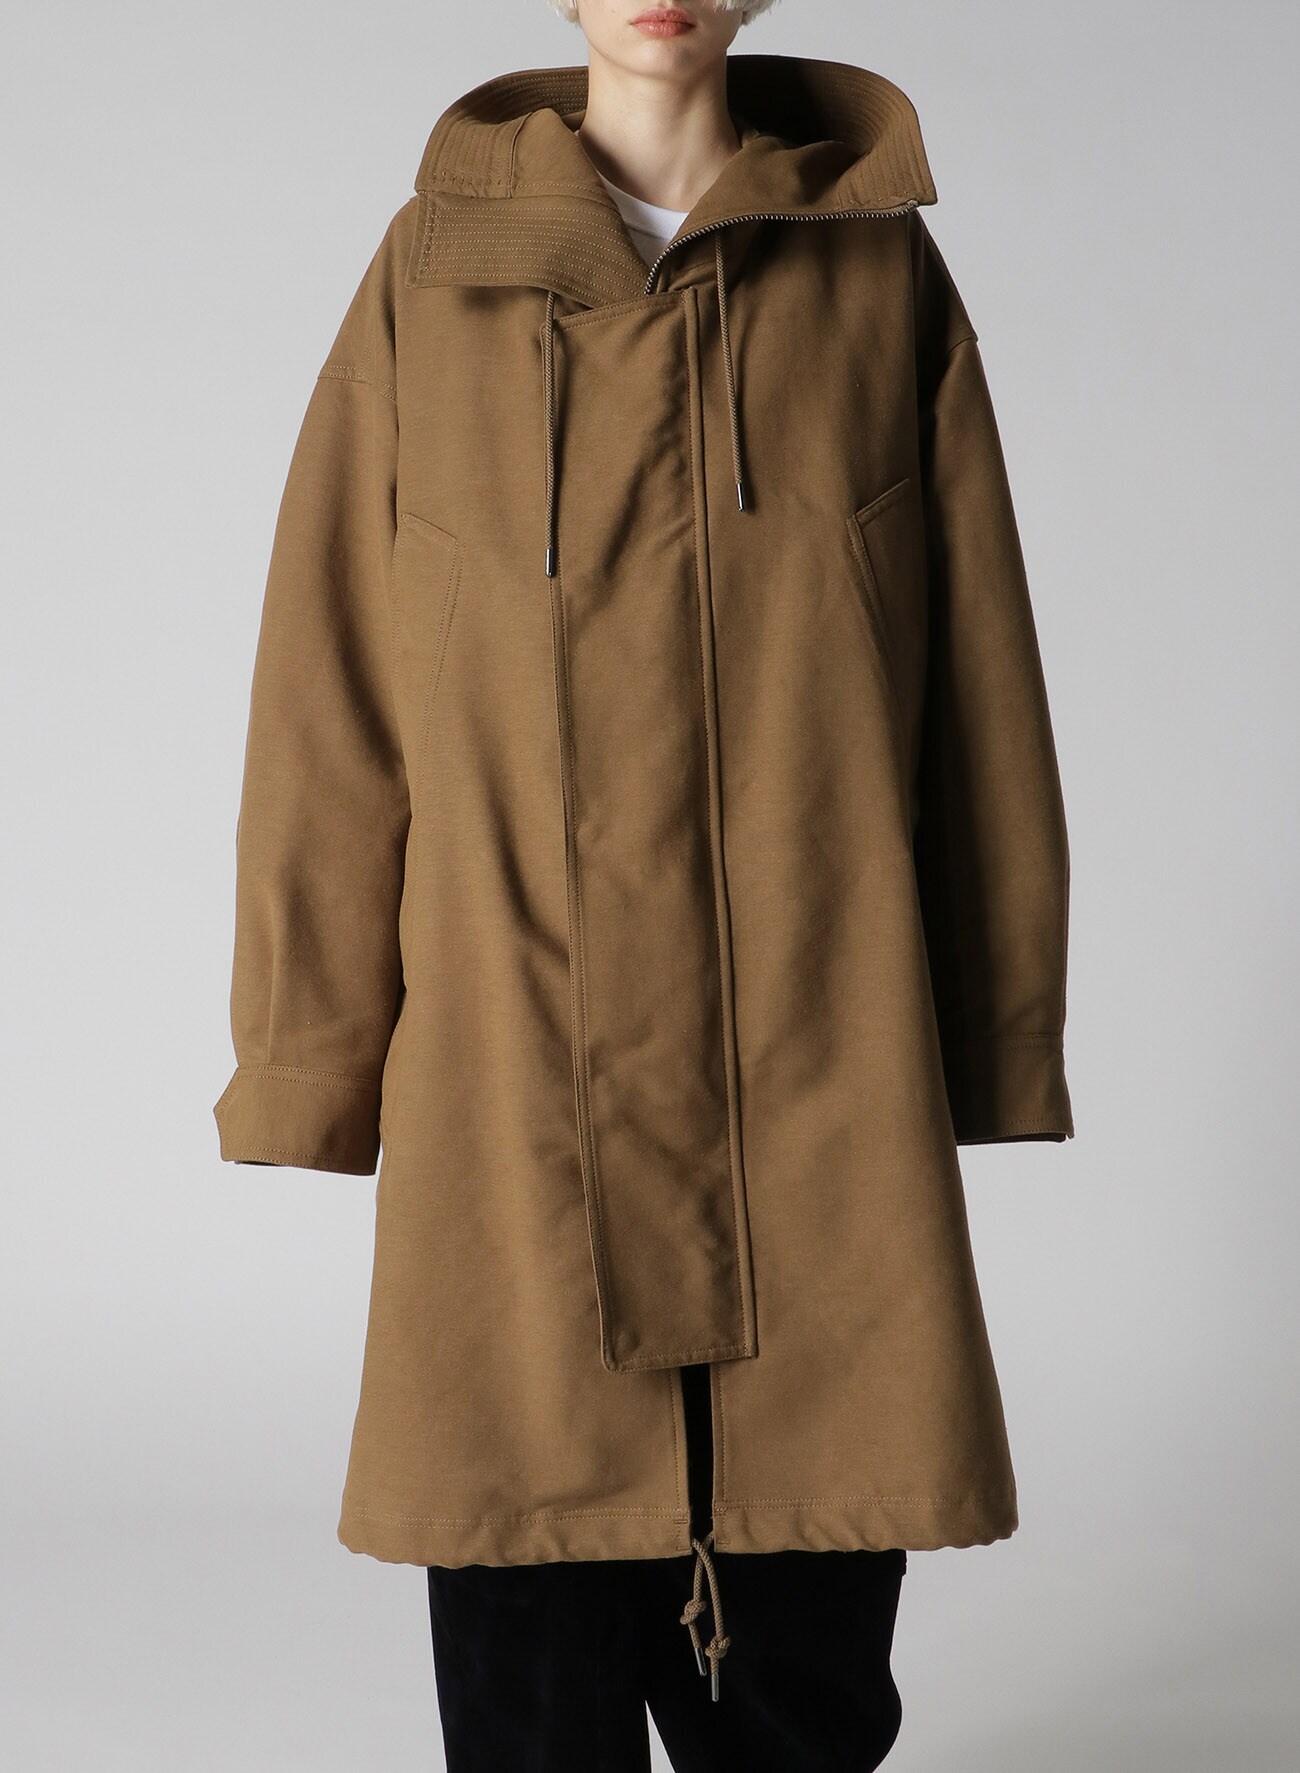 NY/C DOUBLE CLOTH HIGH NECK HOOD MODS COAT(FREE SIZE BEIGE